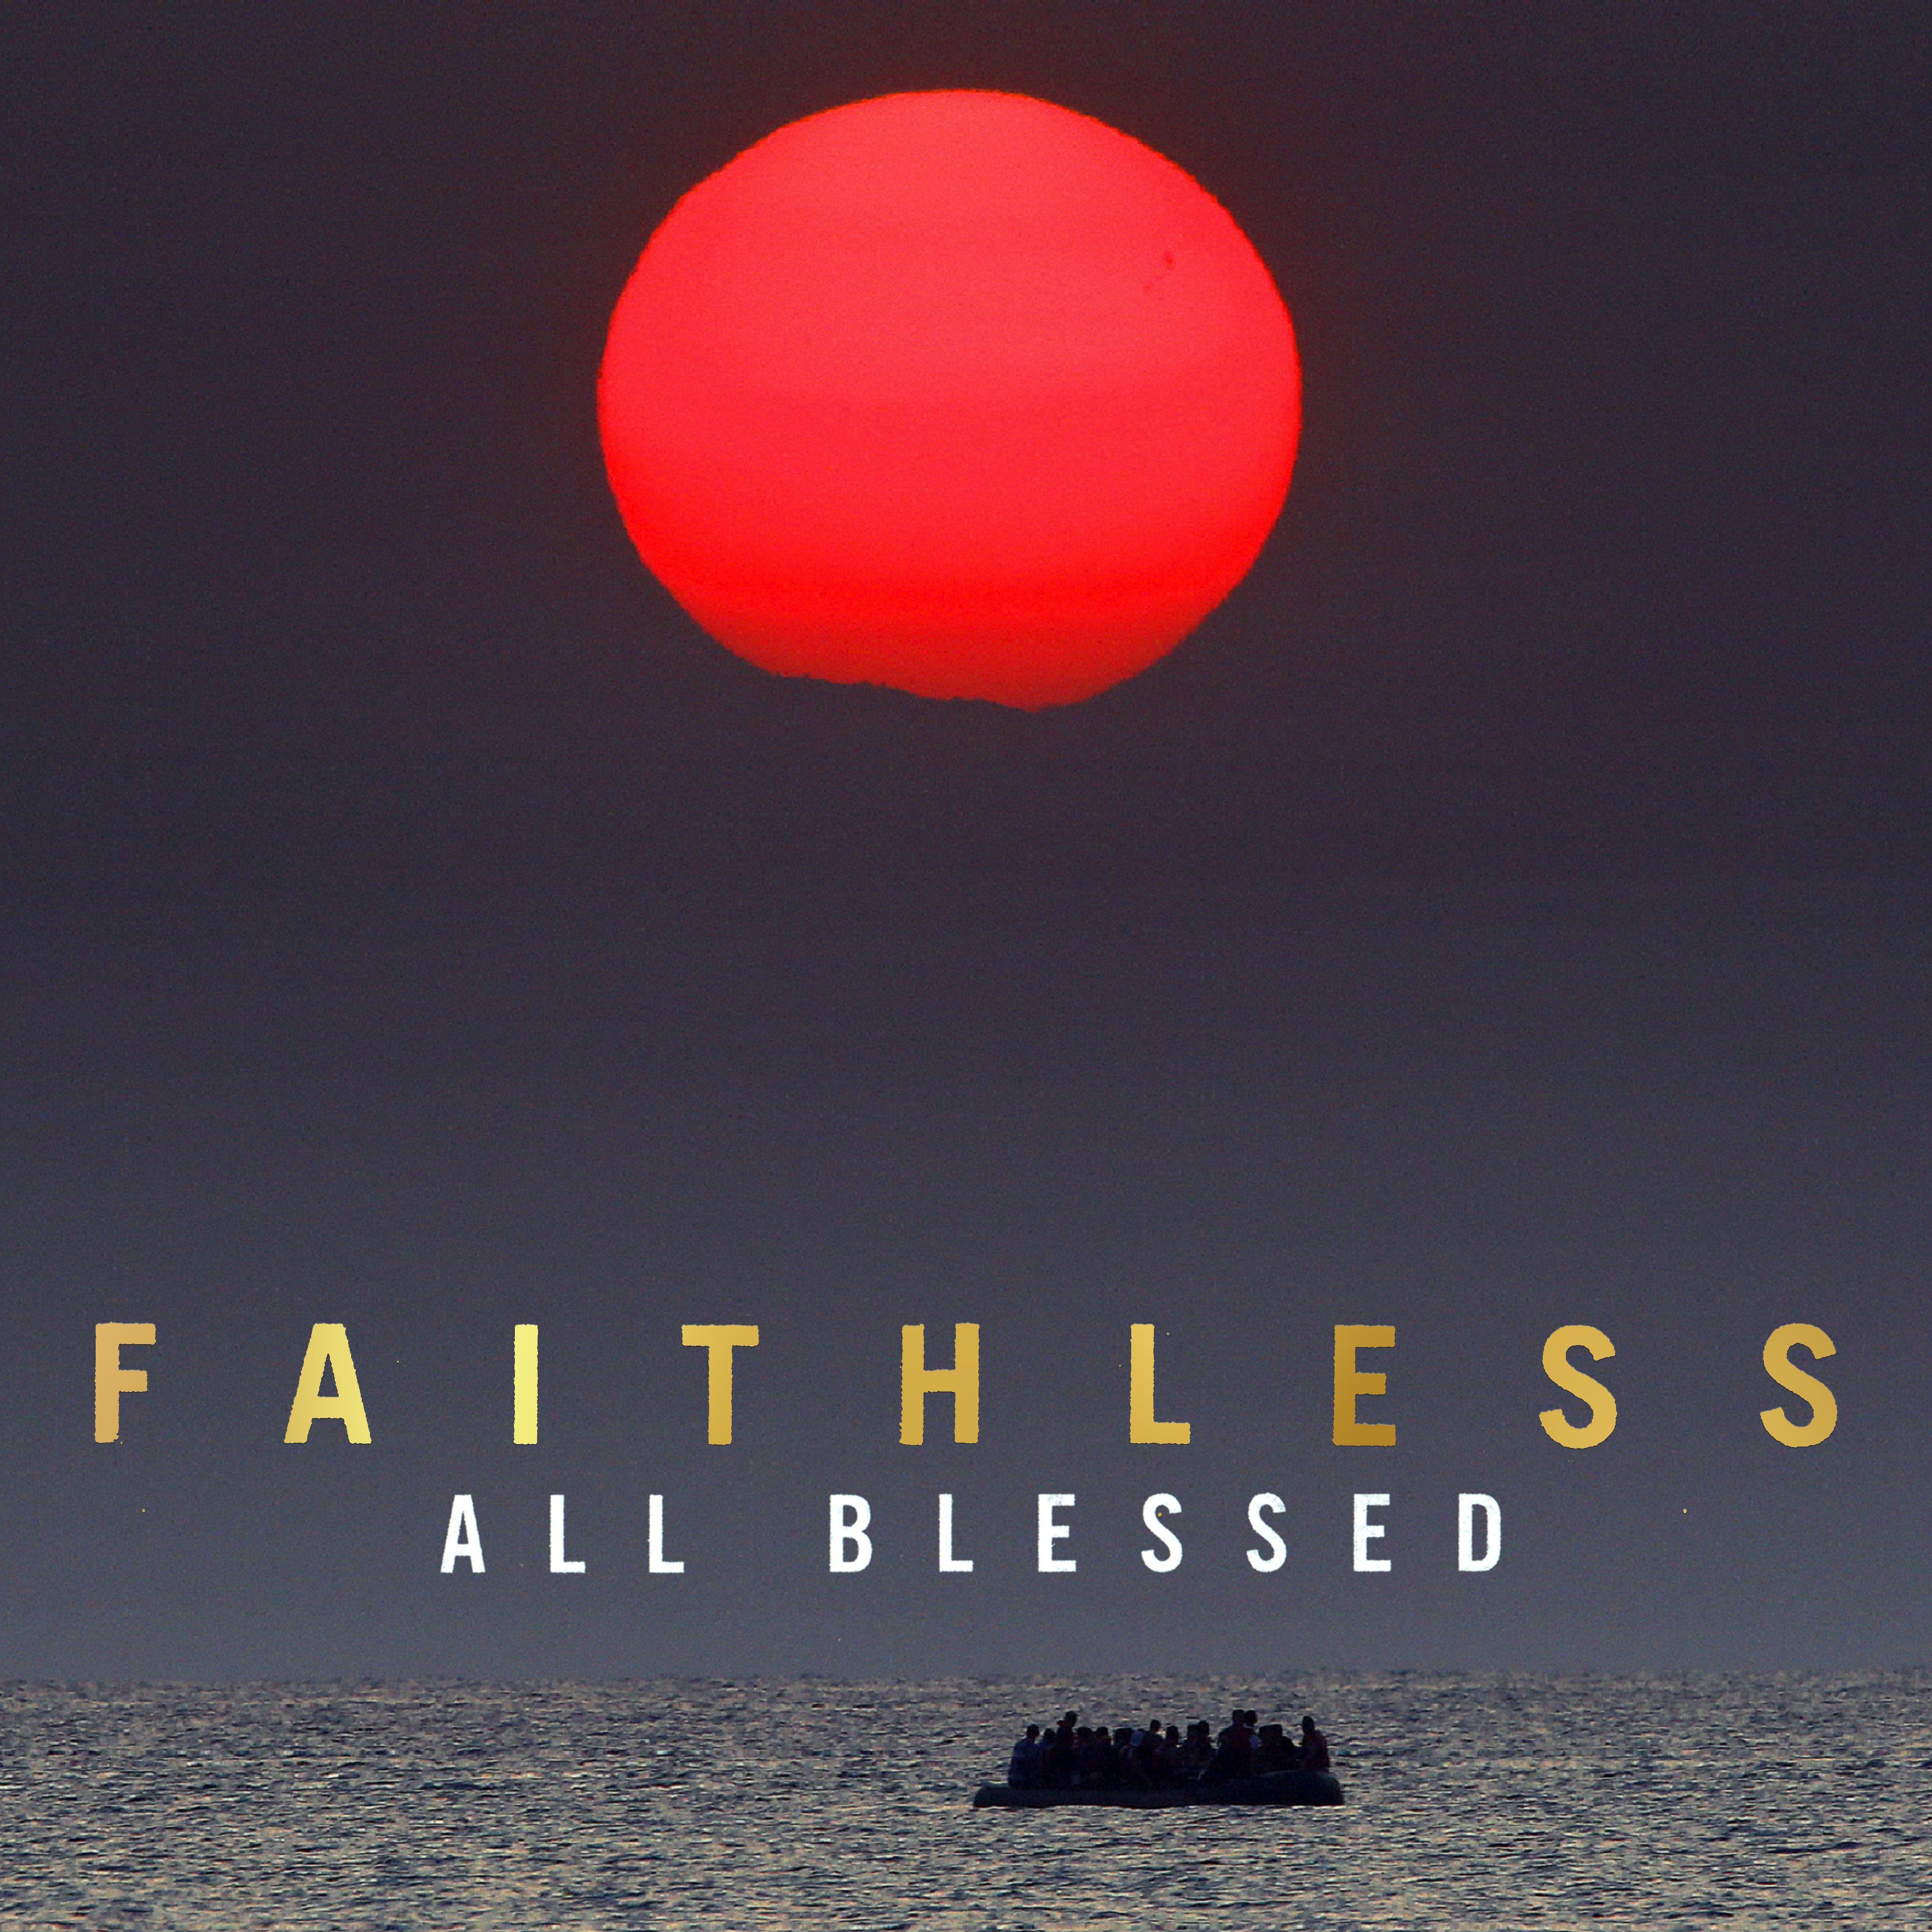 Faithless - Gains (feat. Suli Breaks)